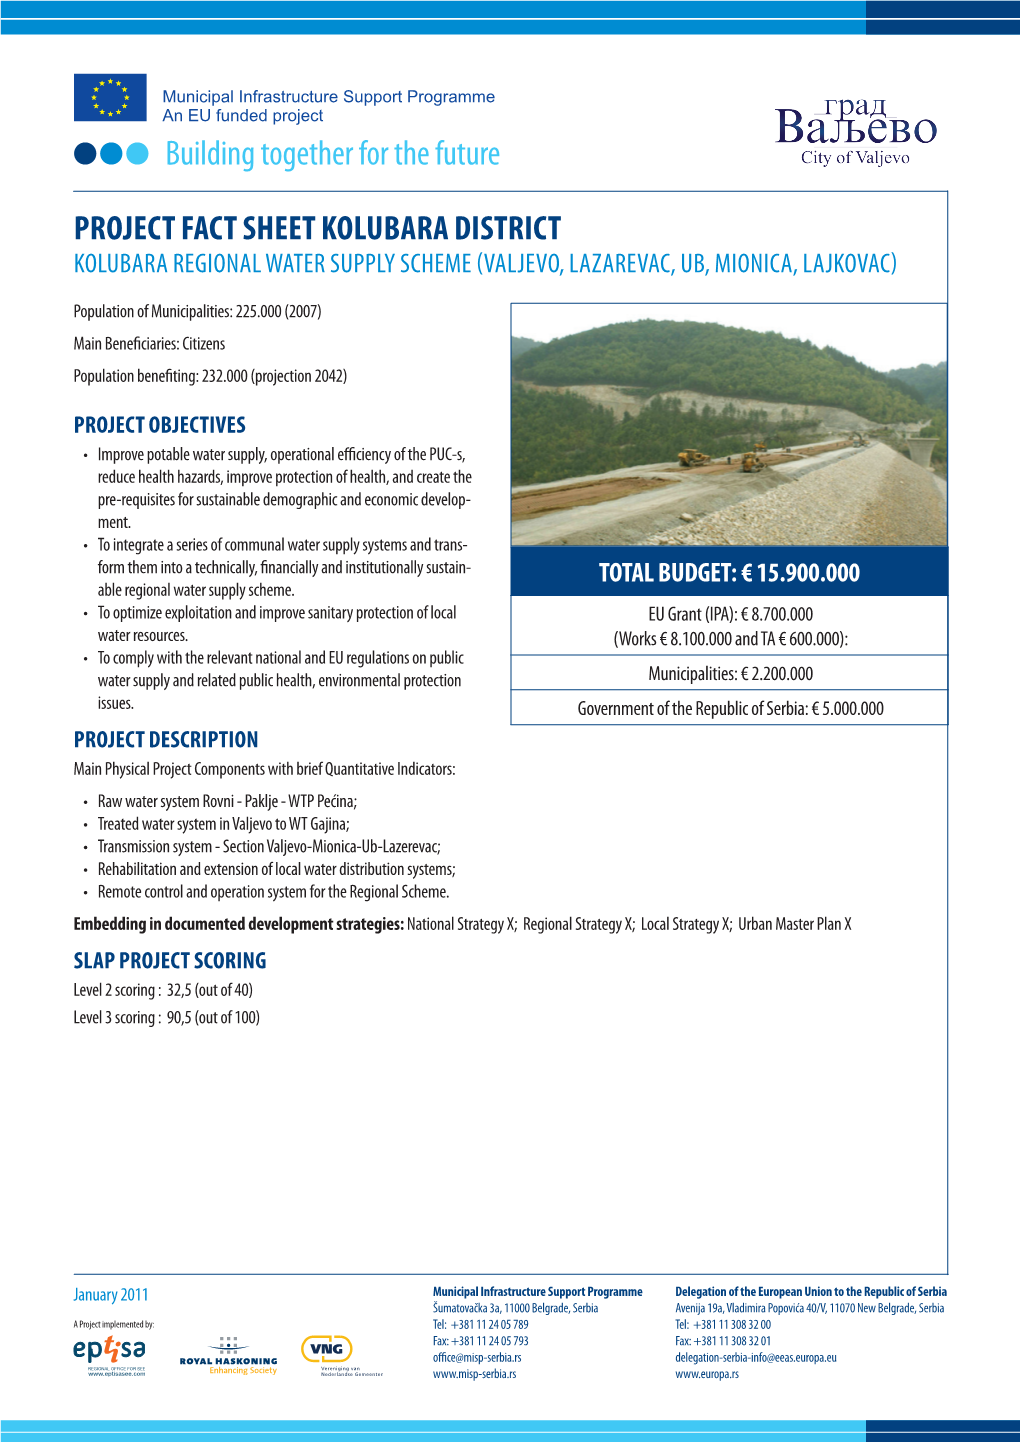 Project Fact Sheet Kolubara District Kolubara Regional Water Supply Scheme (Valjevo, Lazarevac, Ub, Mionica, Lajkovac)